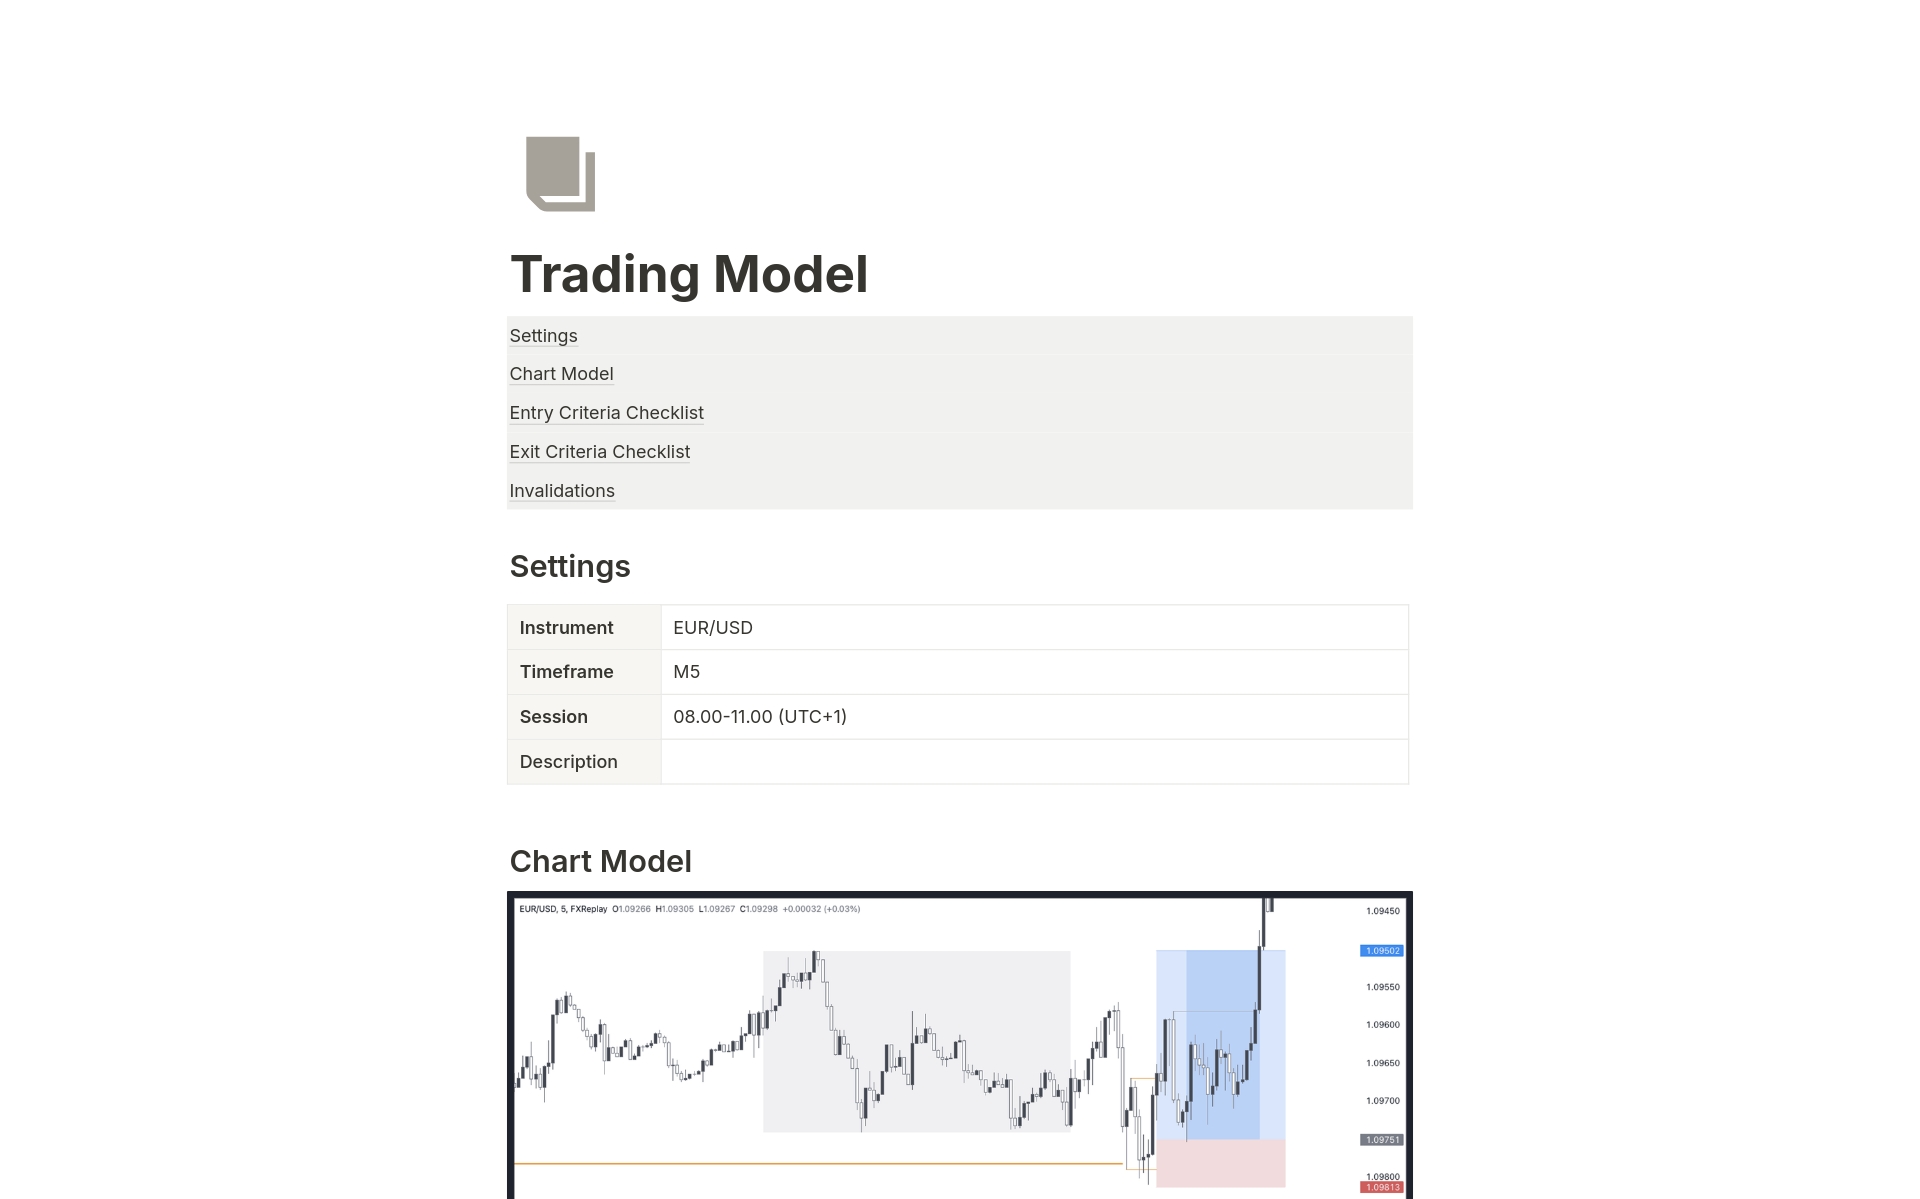 Vista previa de plantilla para Trading Model